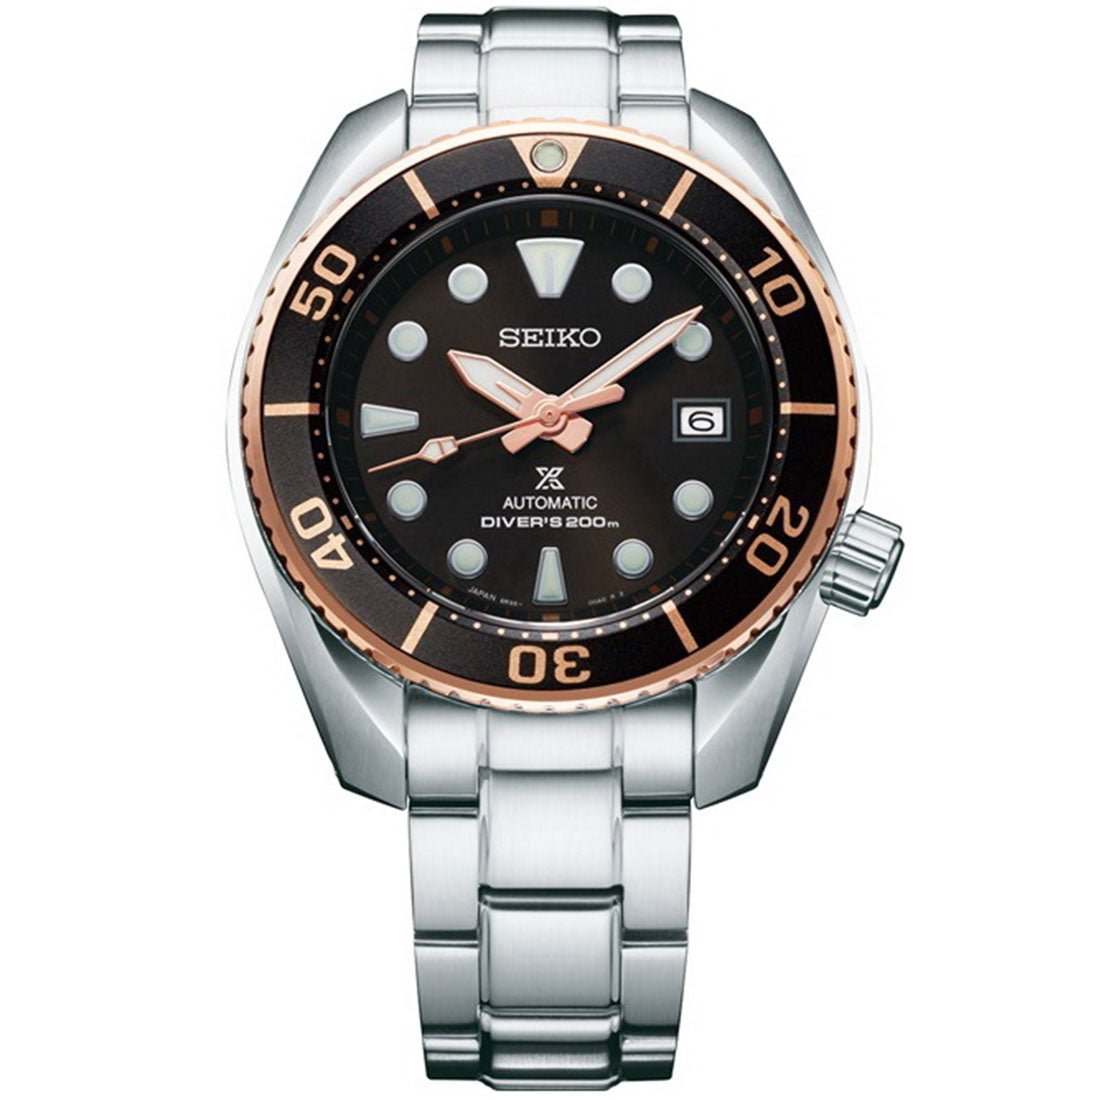 Seiko Prospex GINZA 2020 Limited Edition JDM Watch SBDC114 -Seiko